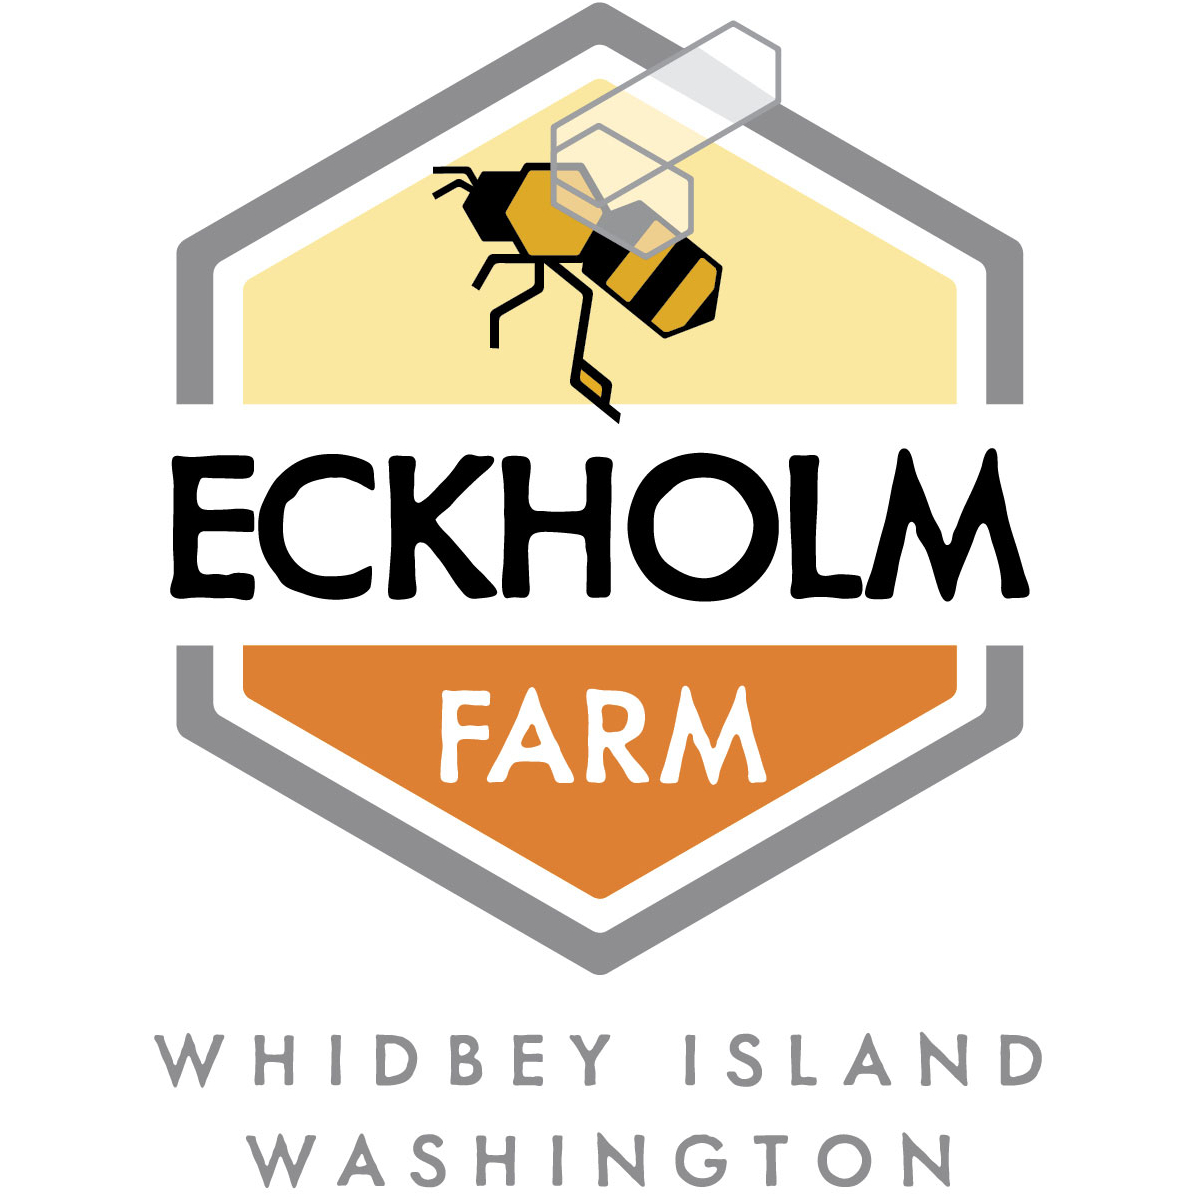 Eckholm Farm